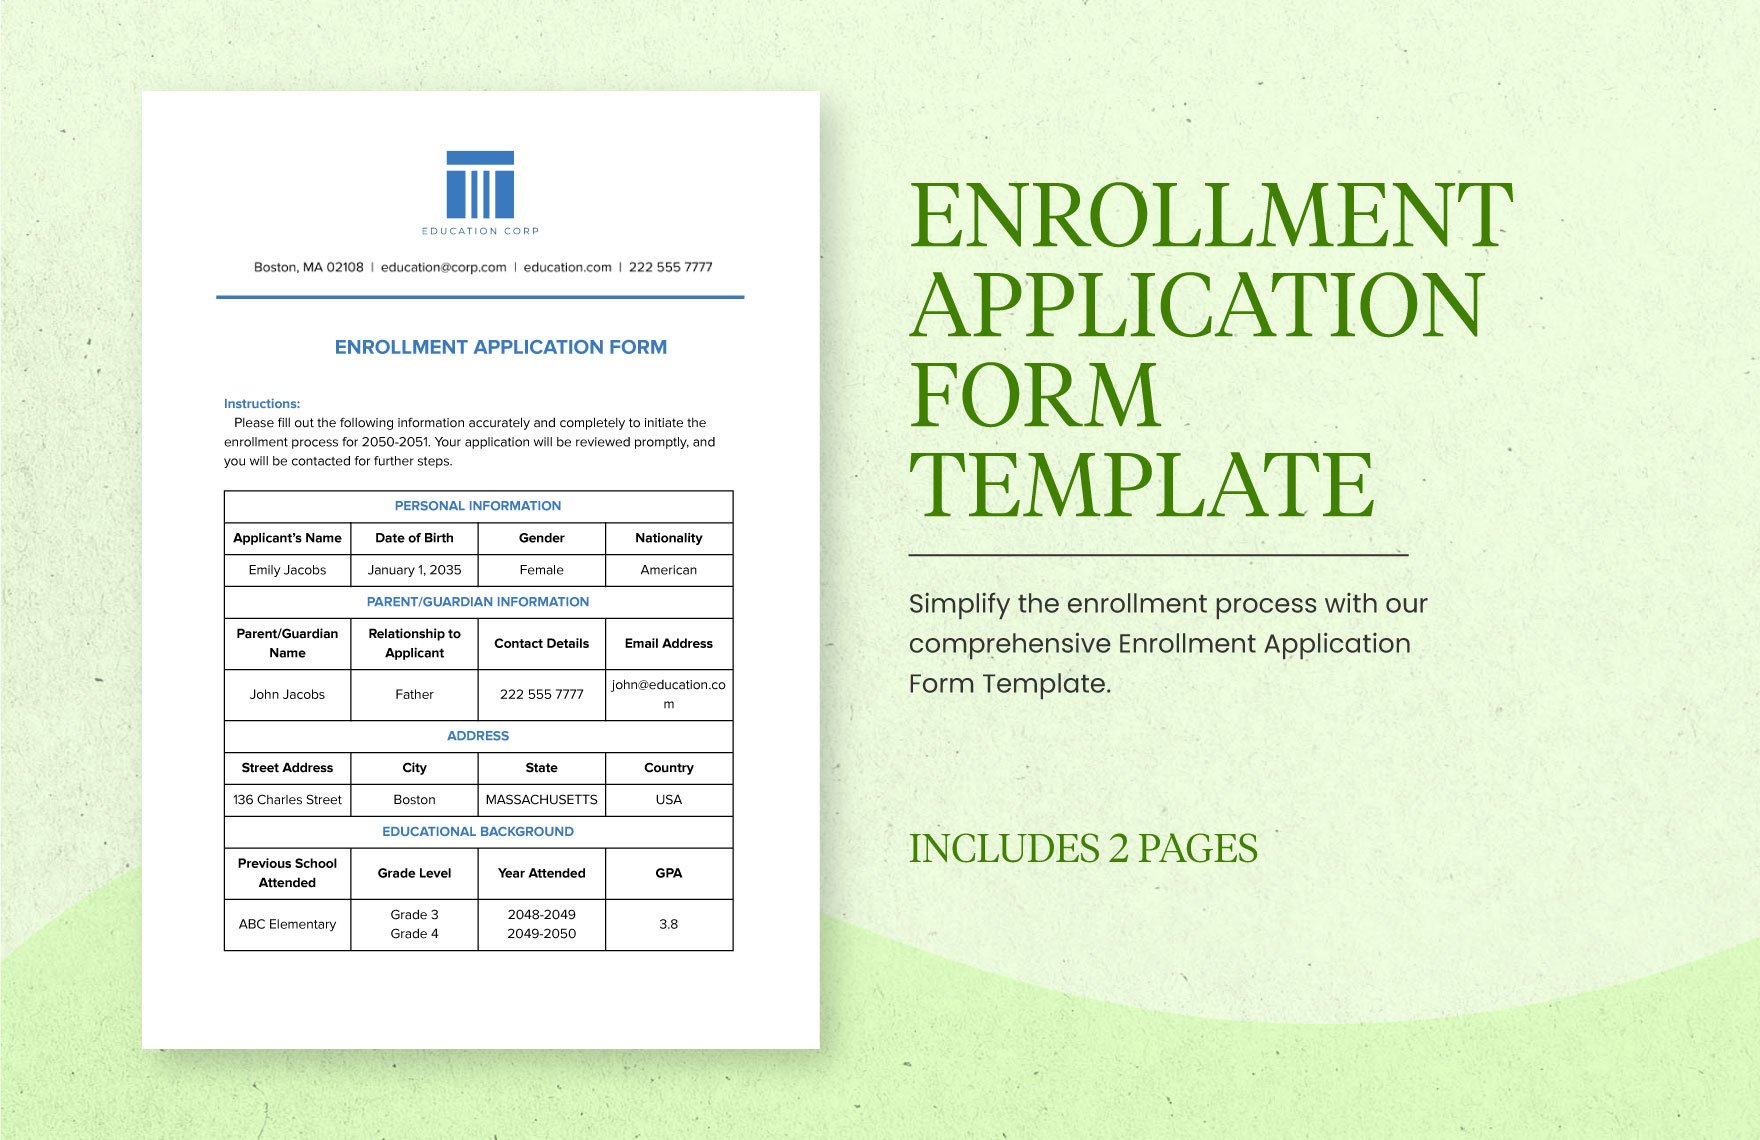 Enrollment Application Form Template  in Word, Google Docs, PDF